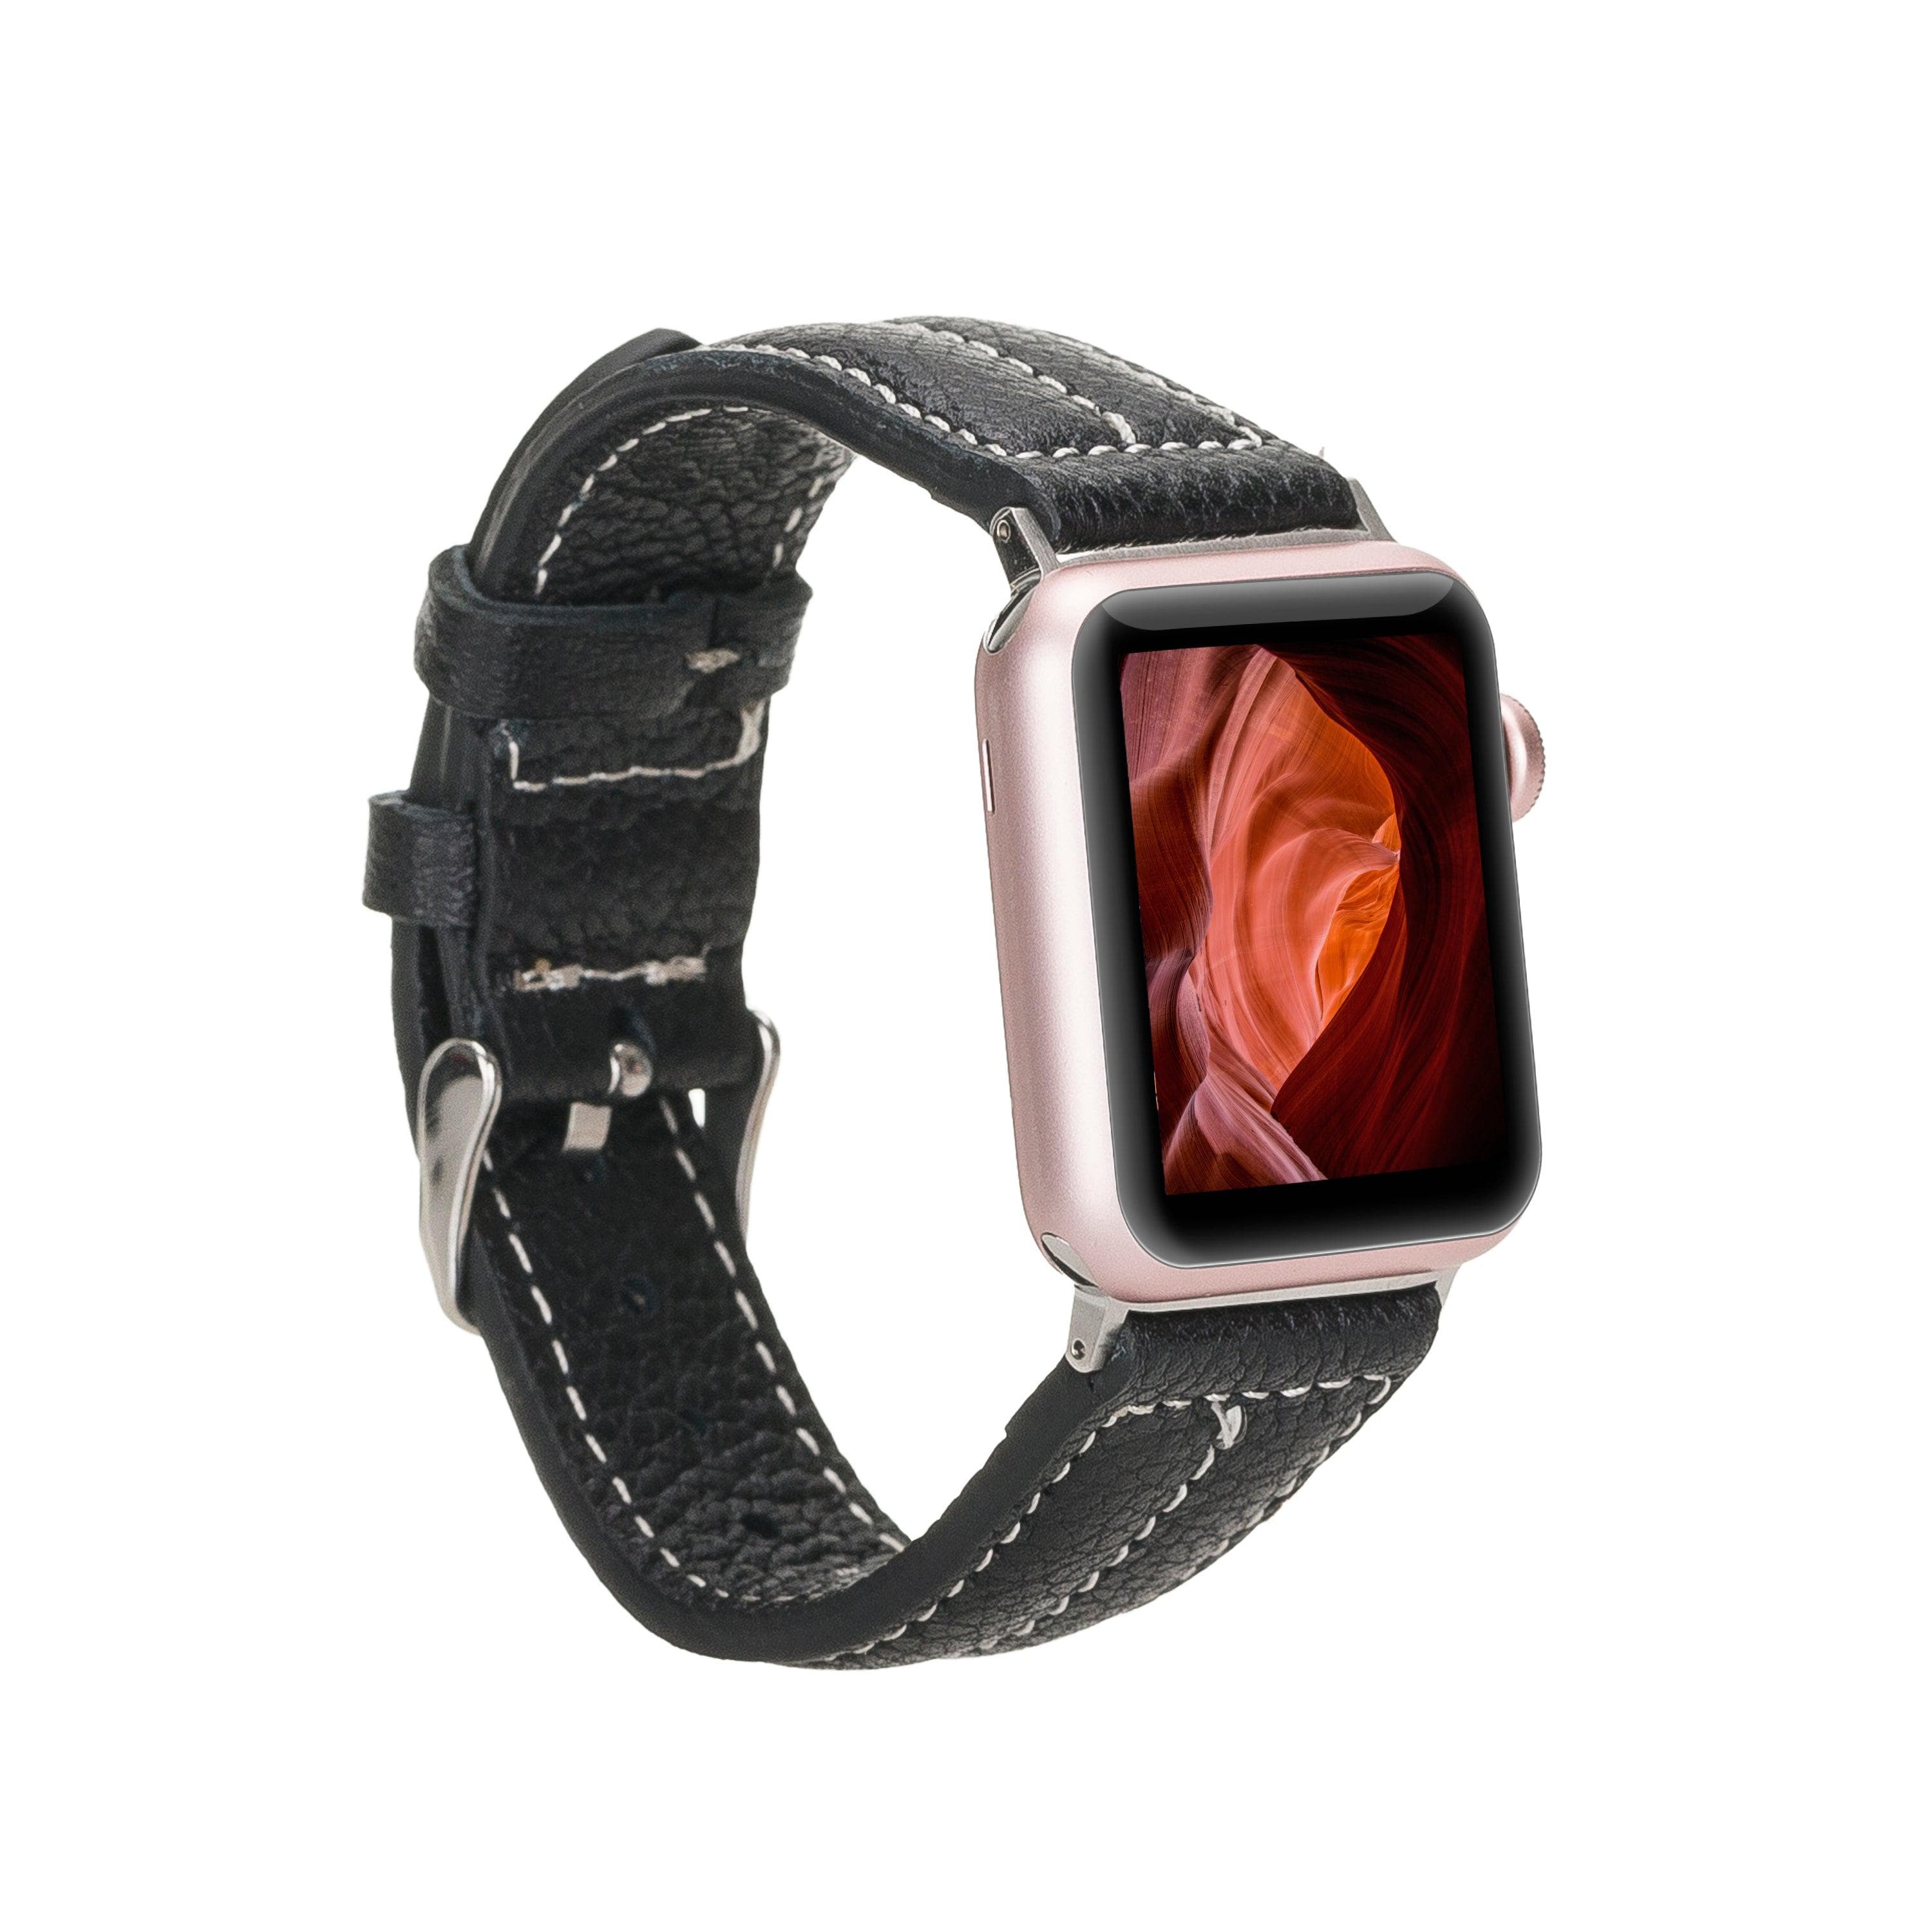 Lincoln Classic Apple Watch Leather Strap Black-NM3 Bouletta LTD